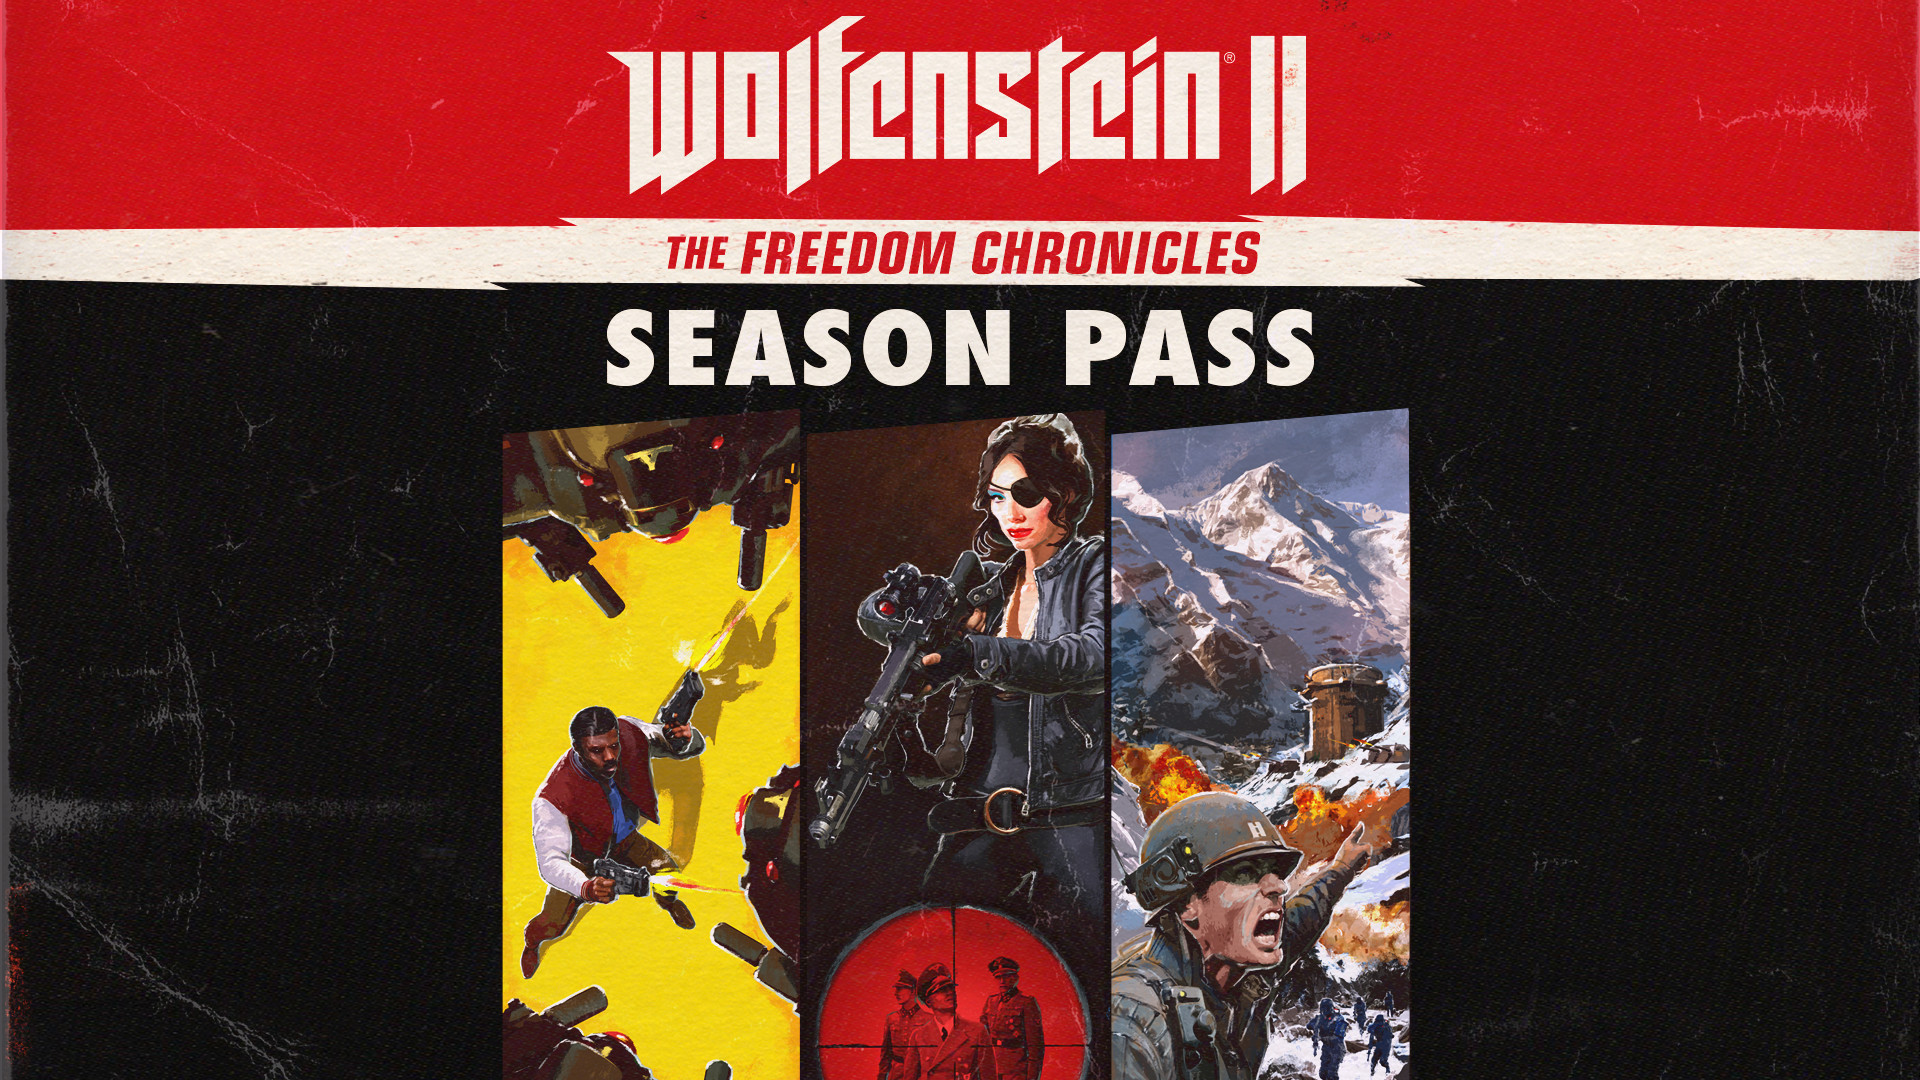 Wolfenstein II: The Freedom Chronicles - Season Pass Featured Screenshot #1